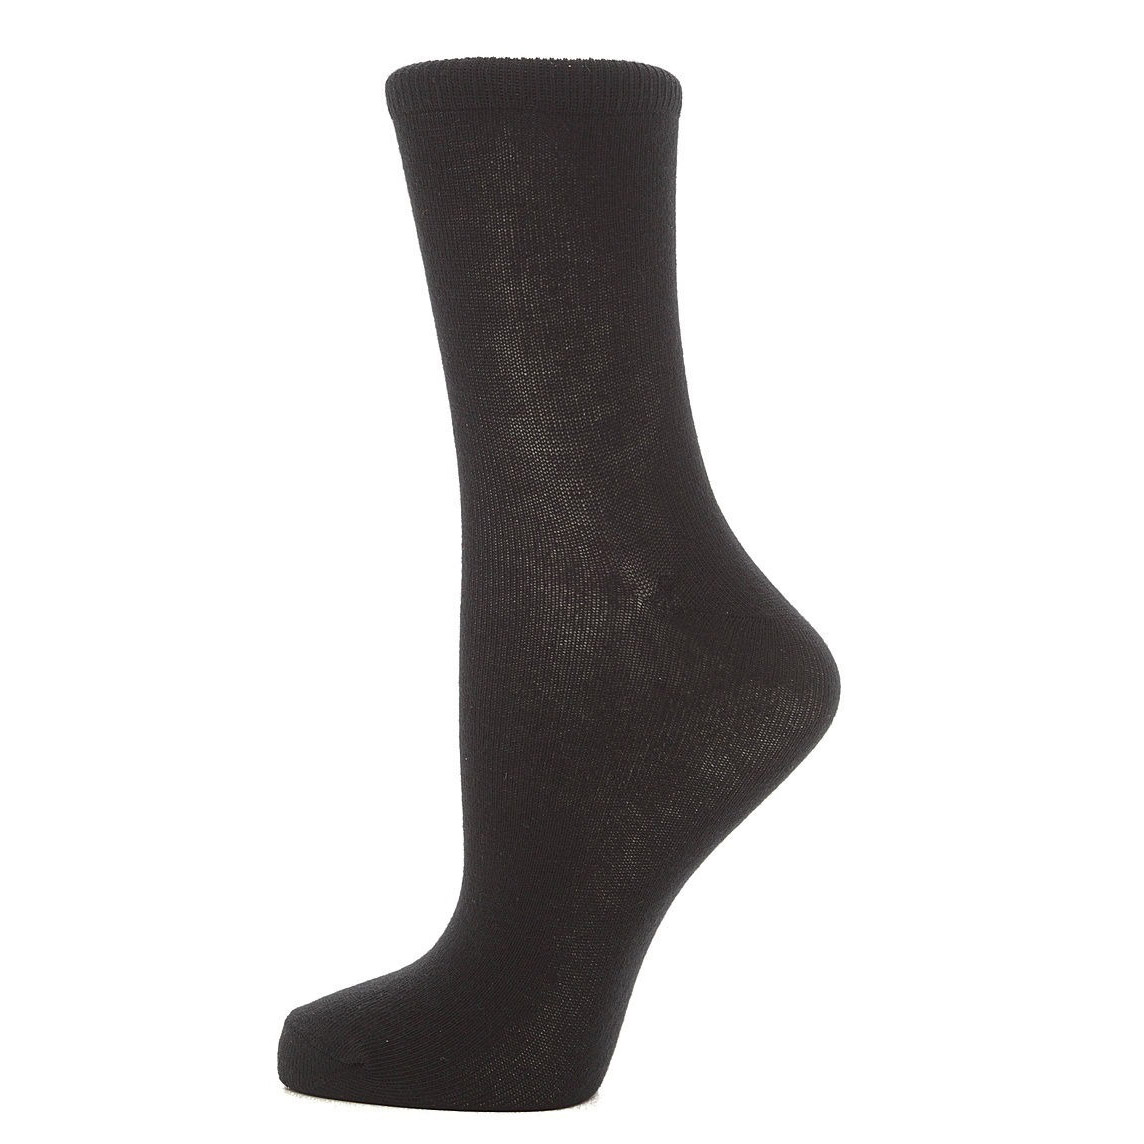 Носки Karmen Calza Lady nero M 38-40, цвет черный, размер 38-40 - фото 1